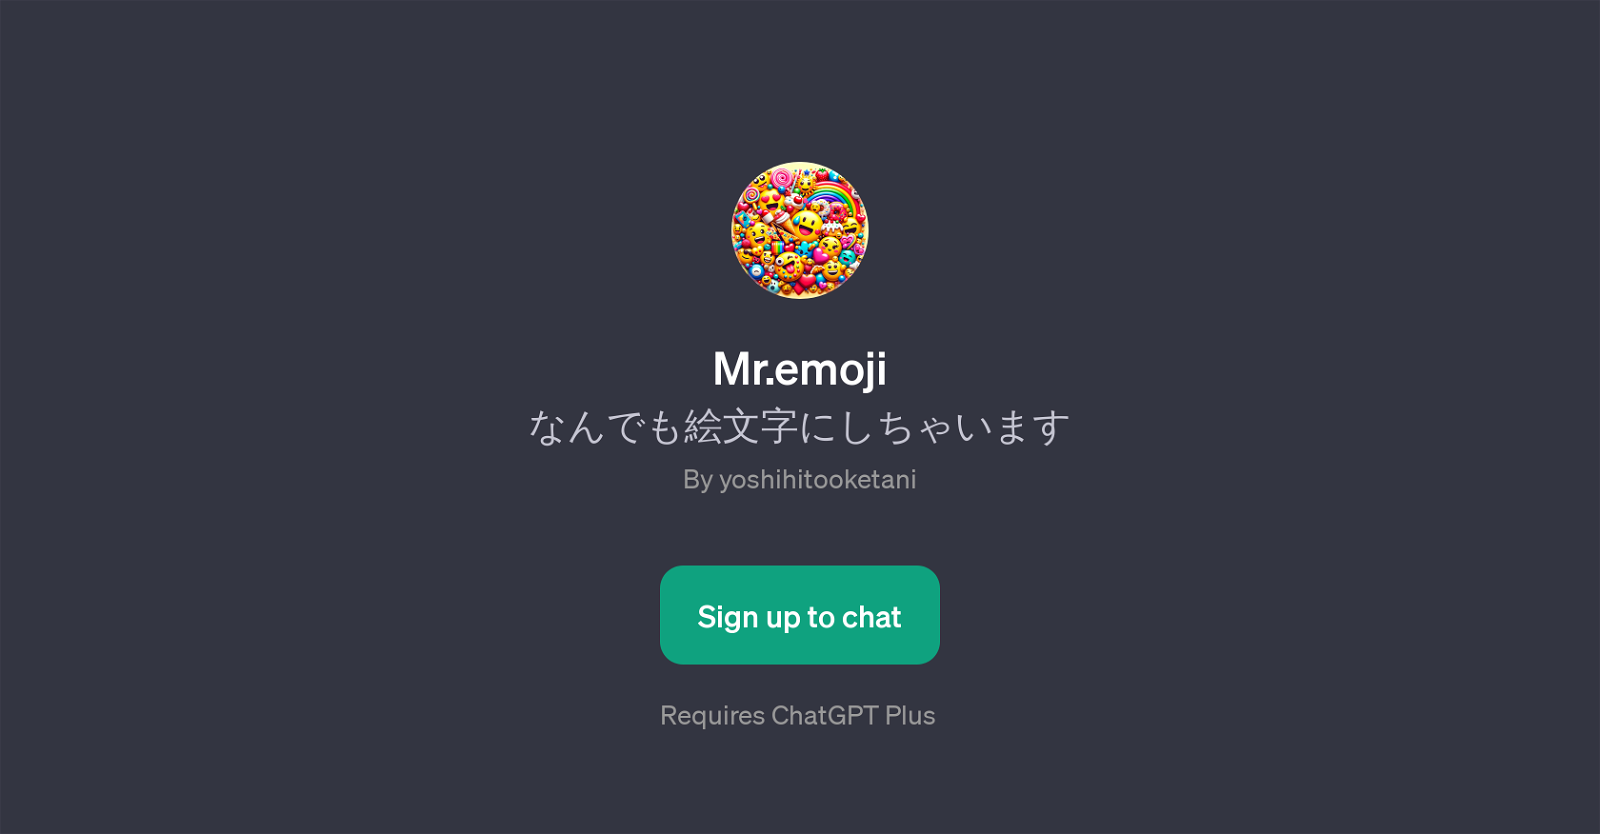 Mr.emoji website